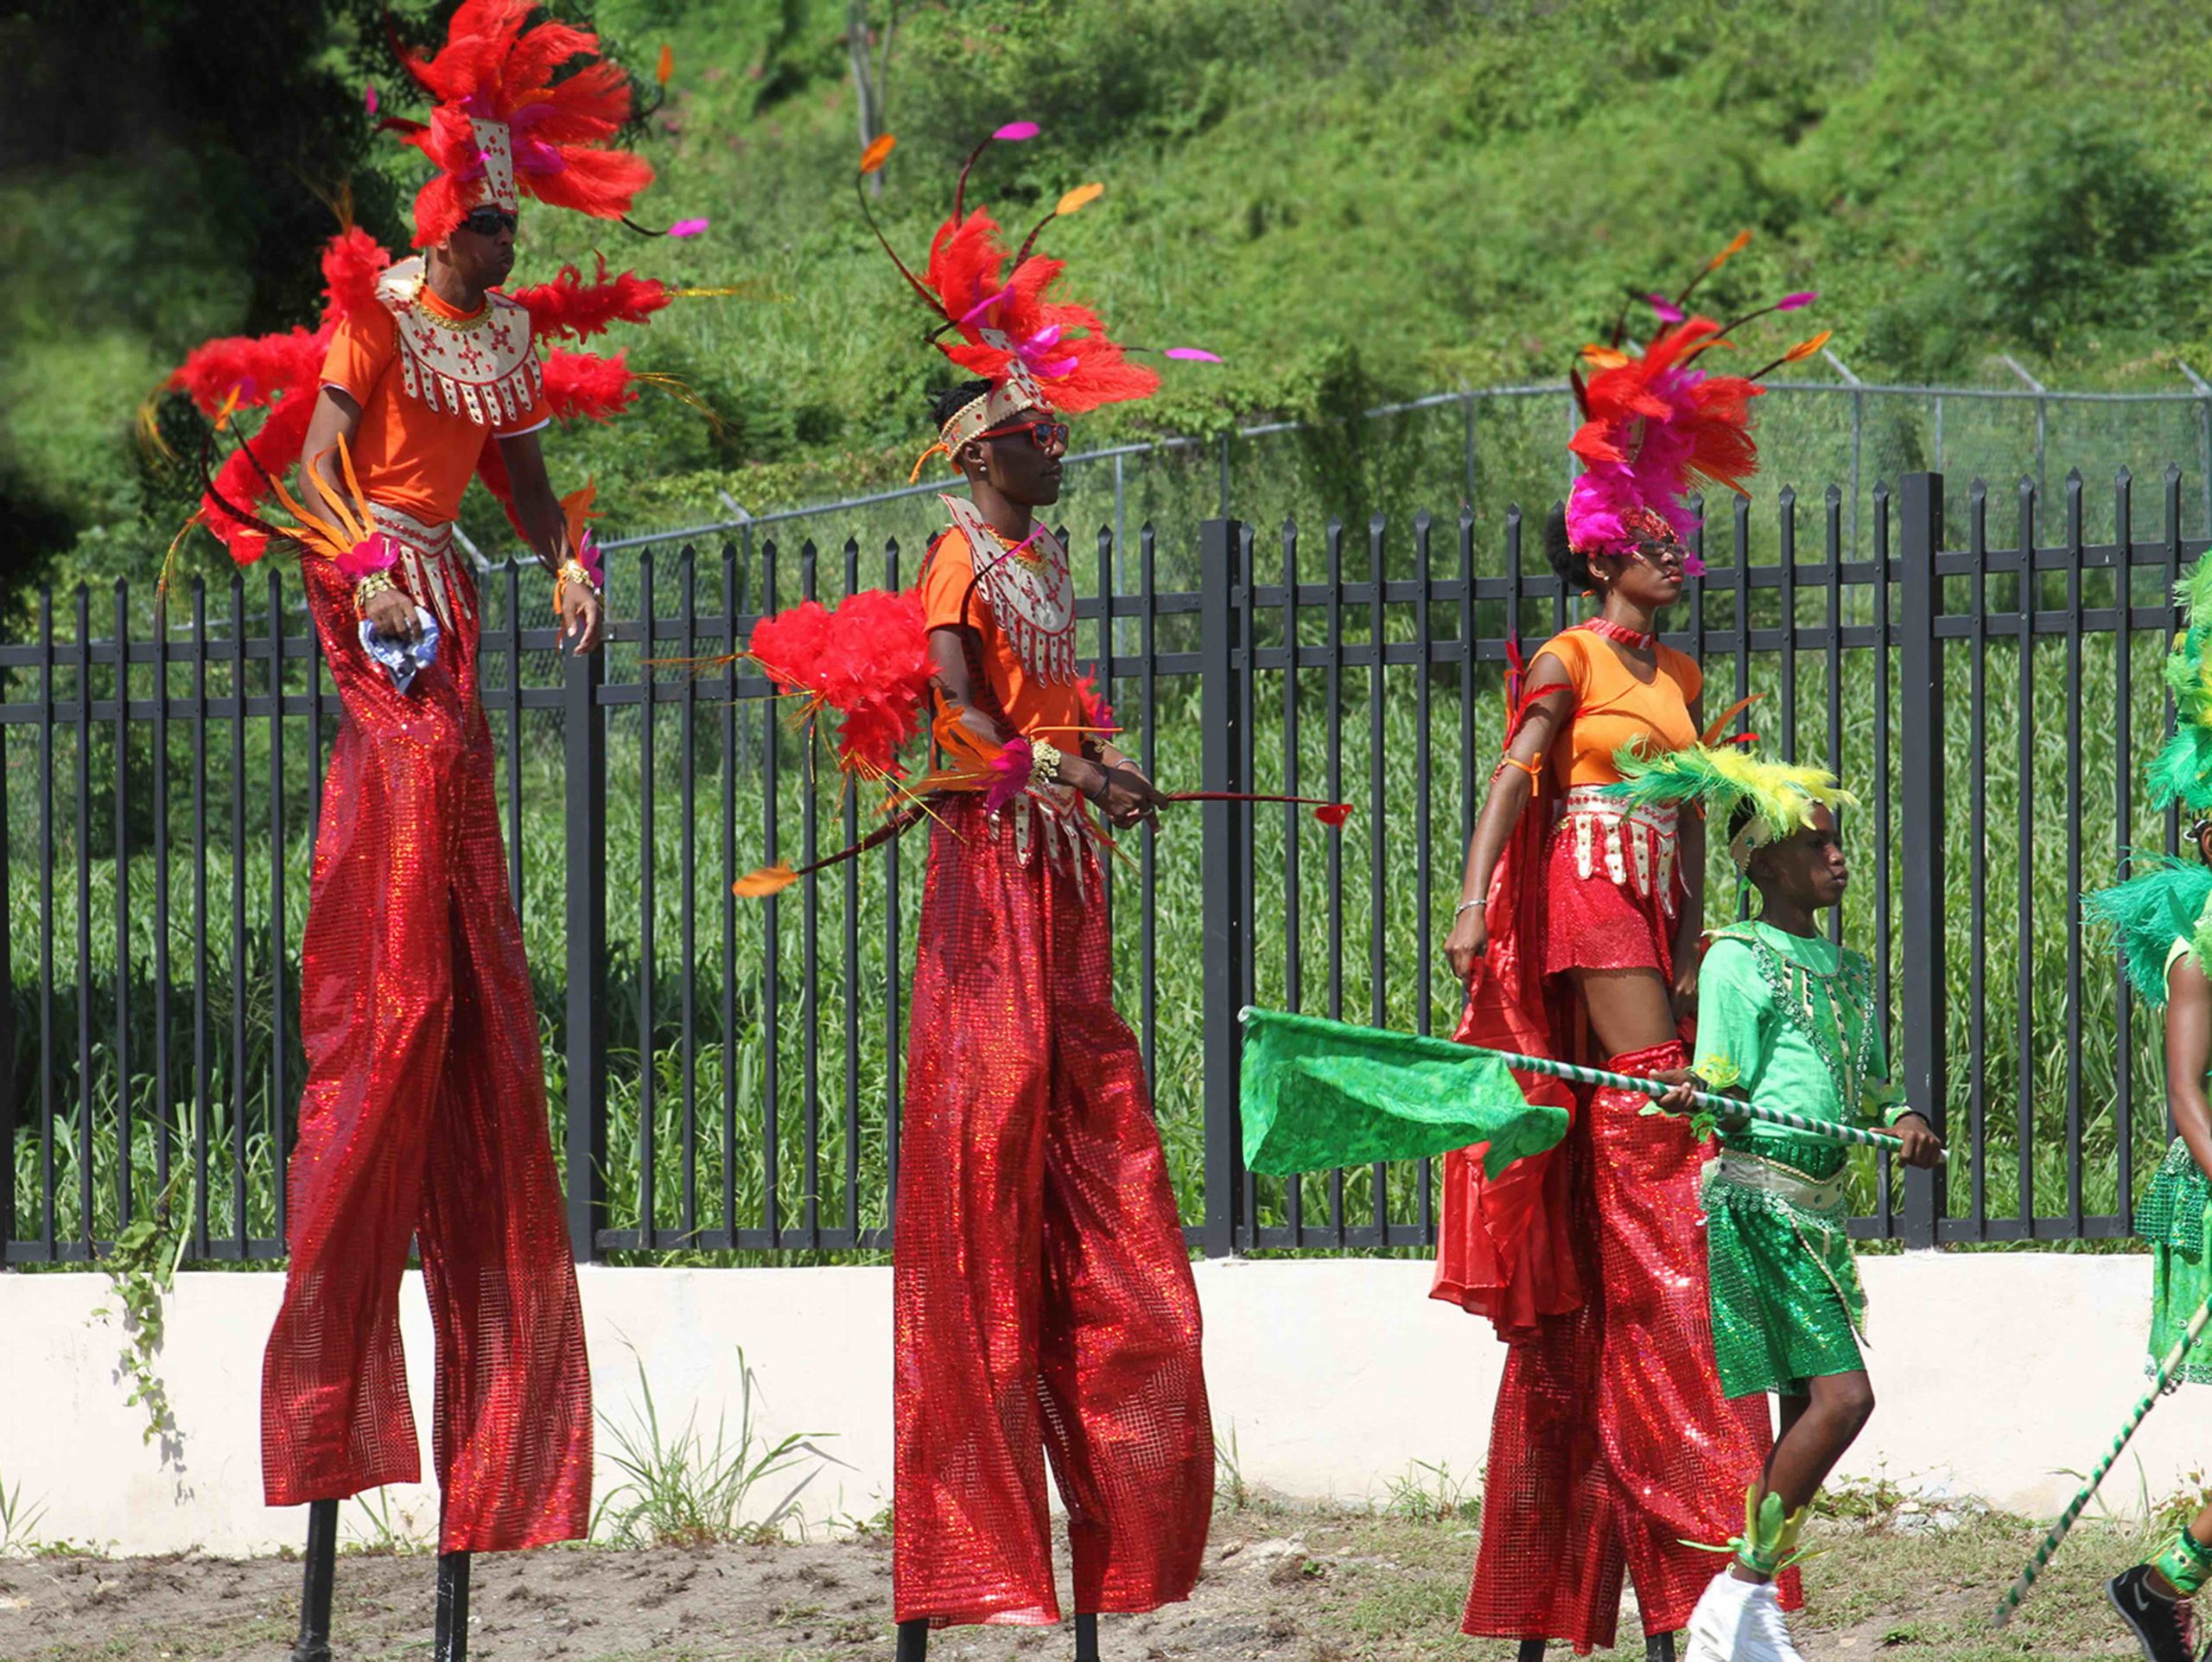 Stilt-walkers at Antigua's Carnival